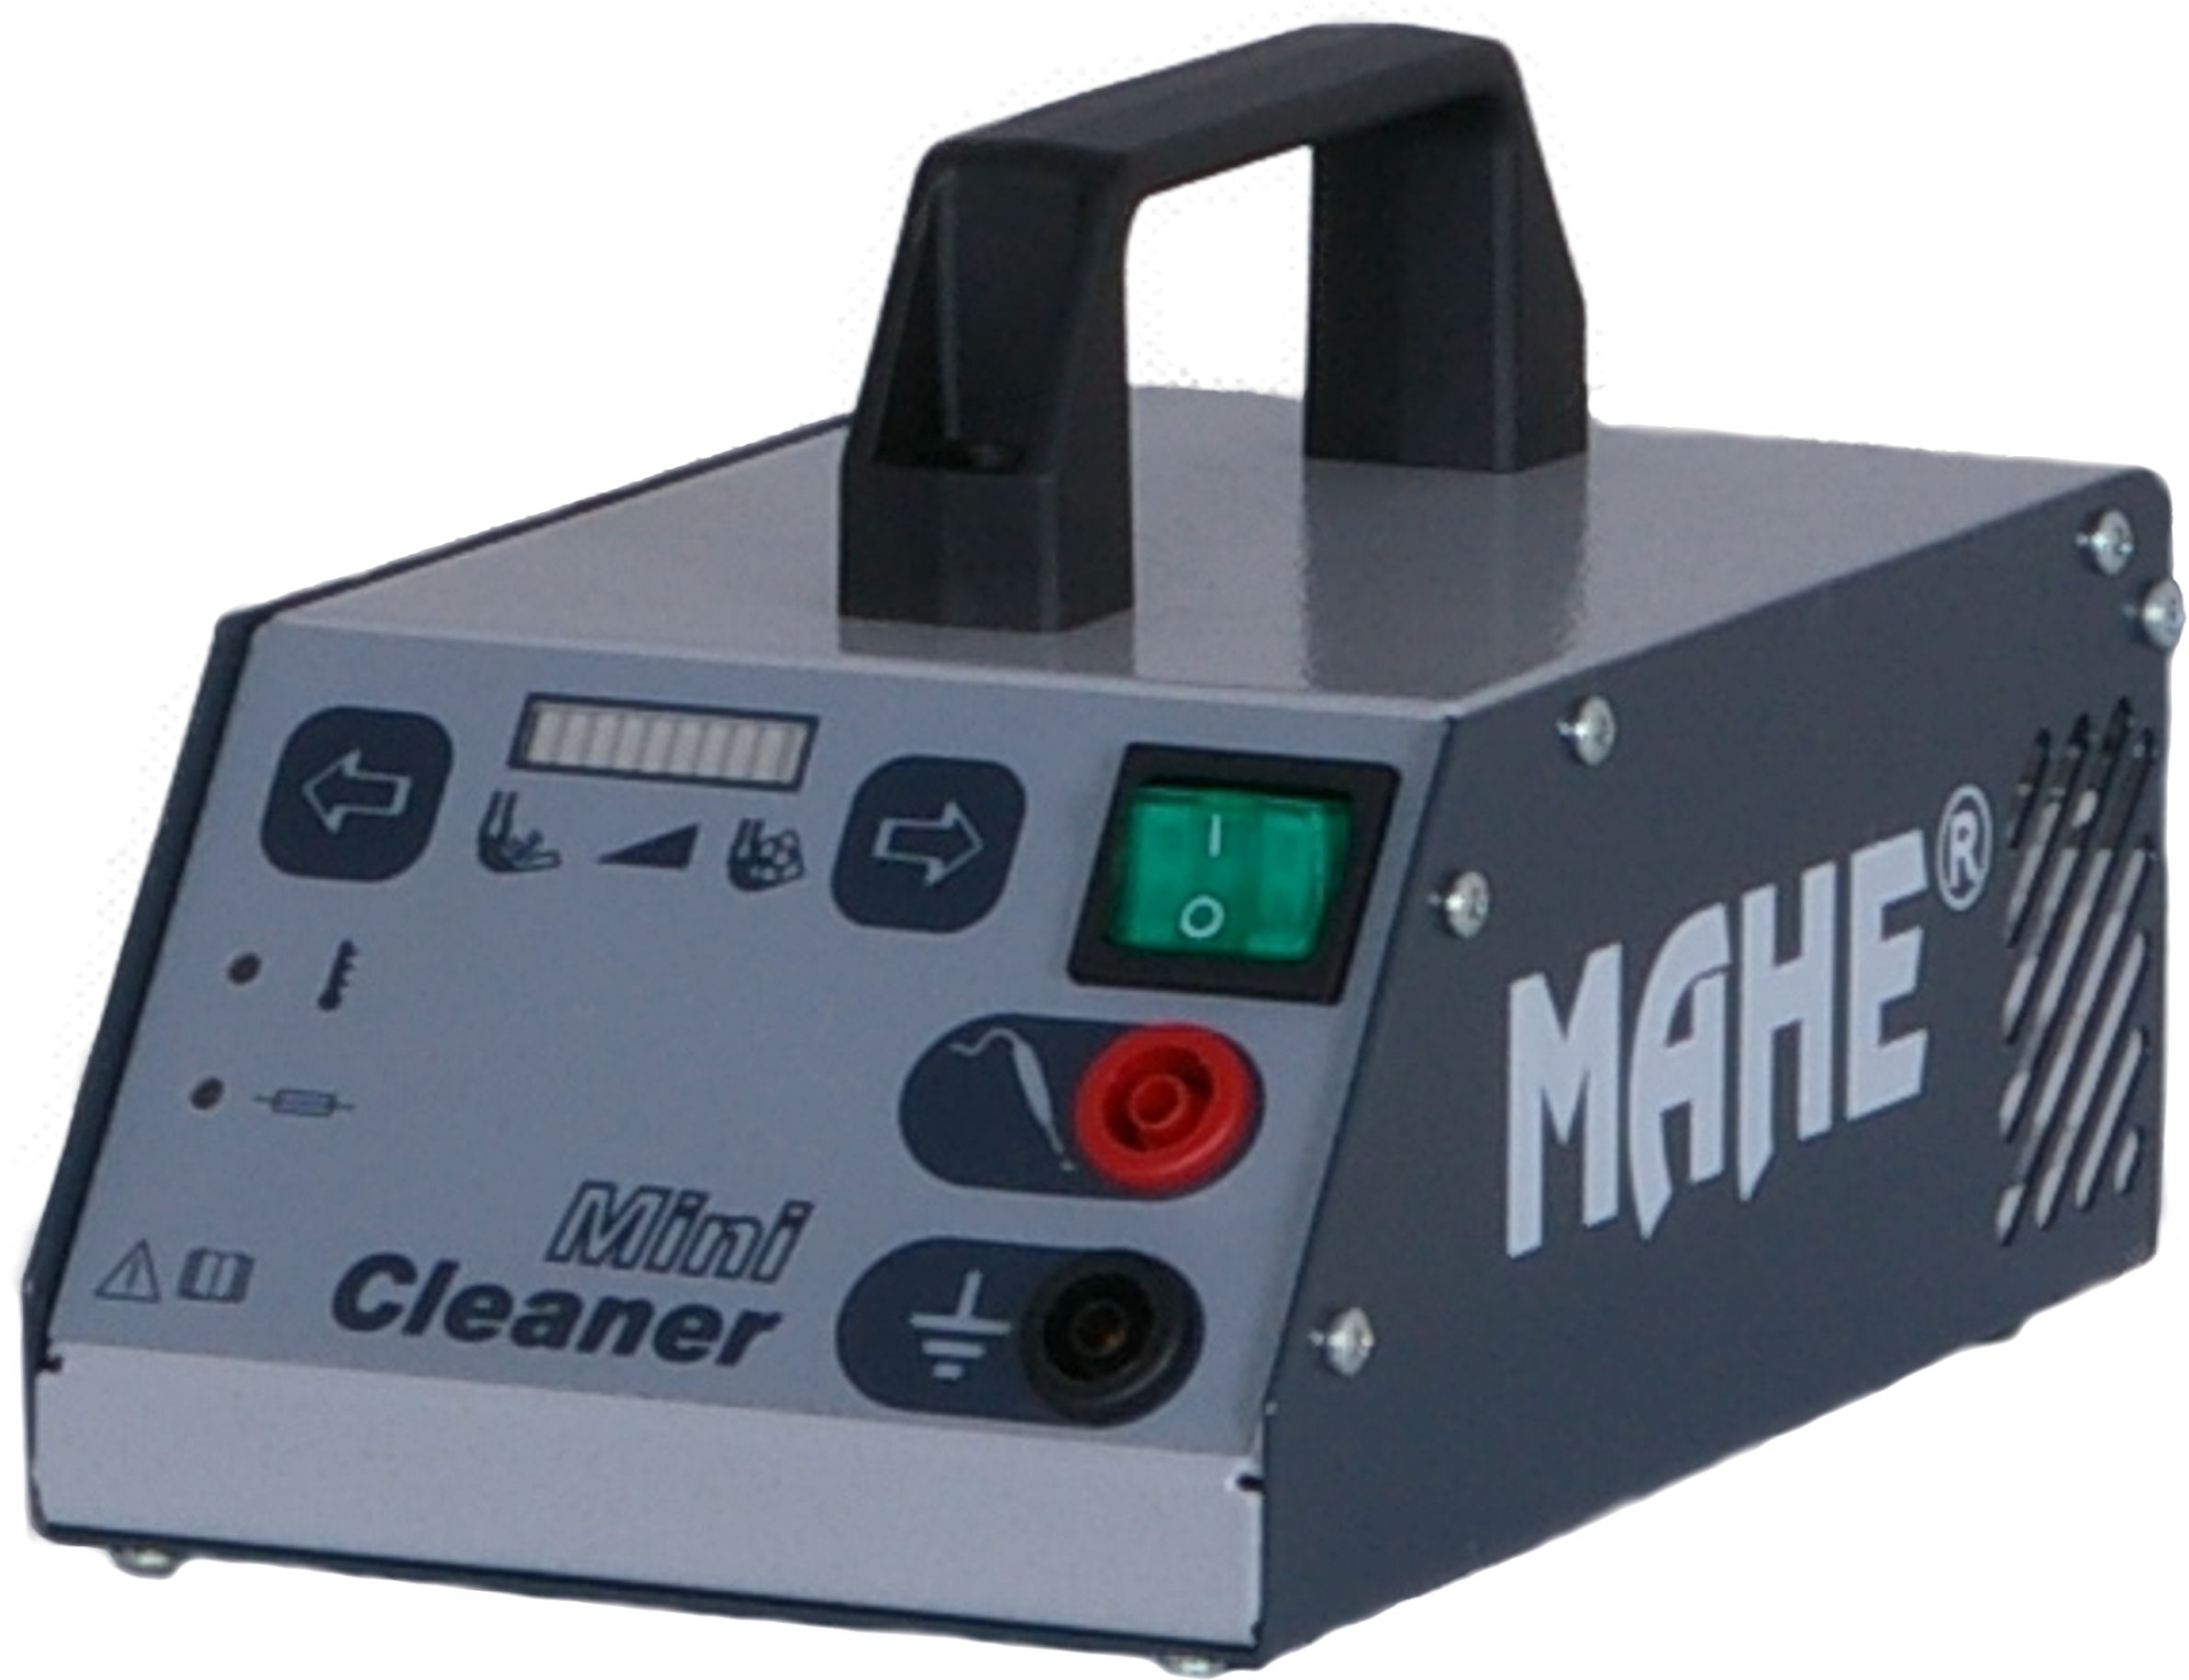 MAHE - MiniCleaner